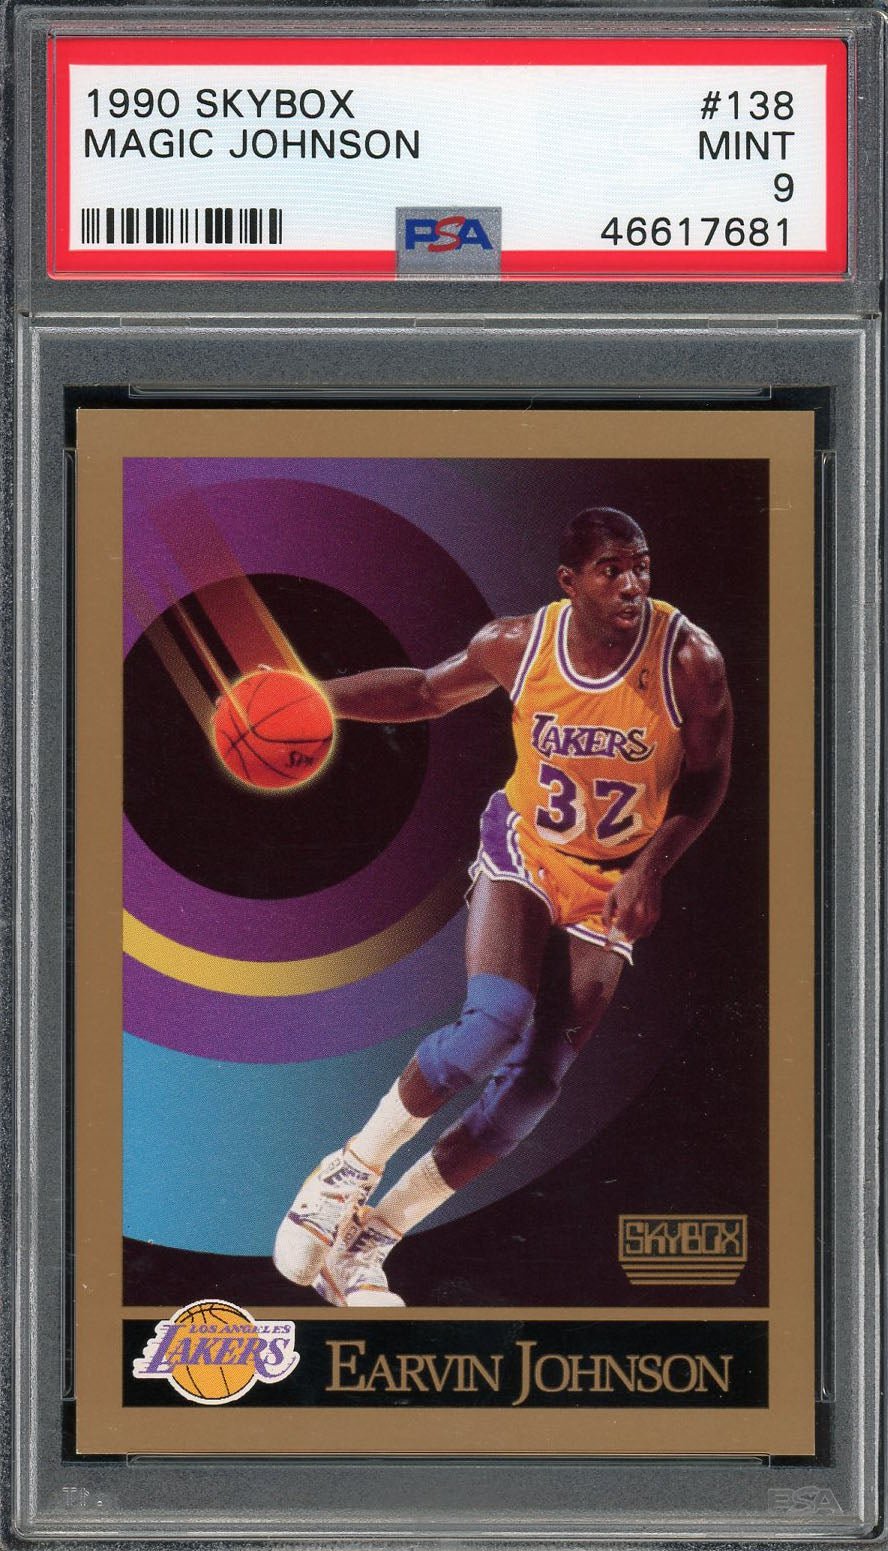 1990 SkyBox Graded Larry Bird Basketball Card